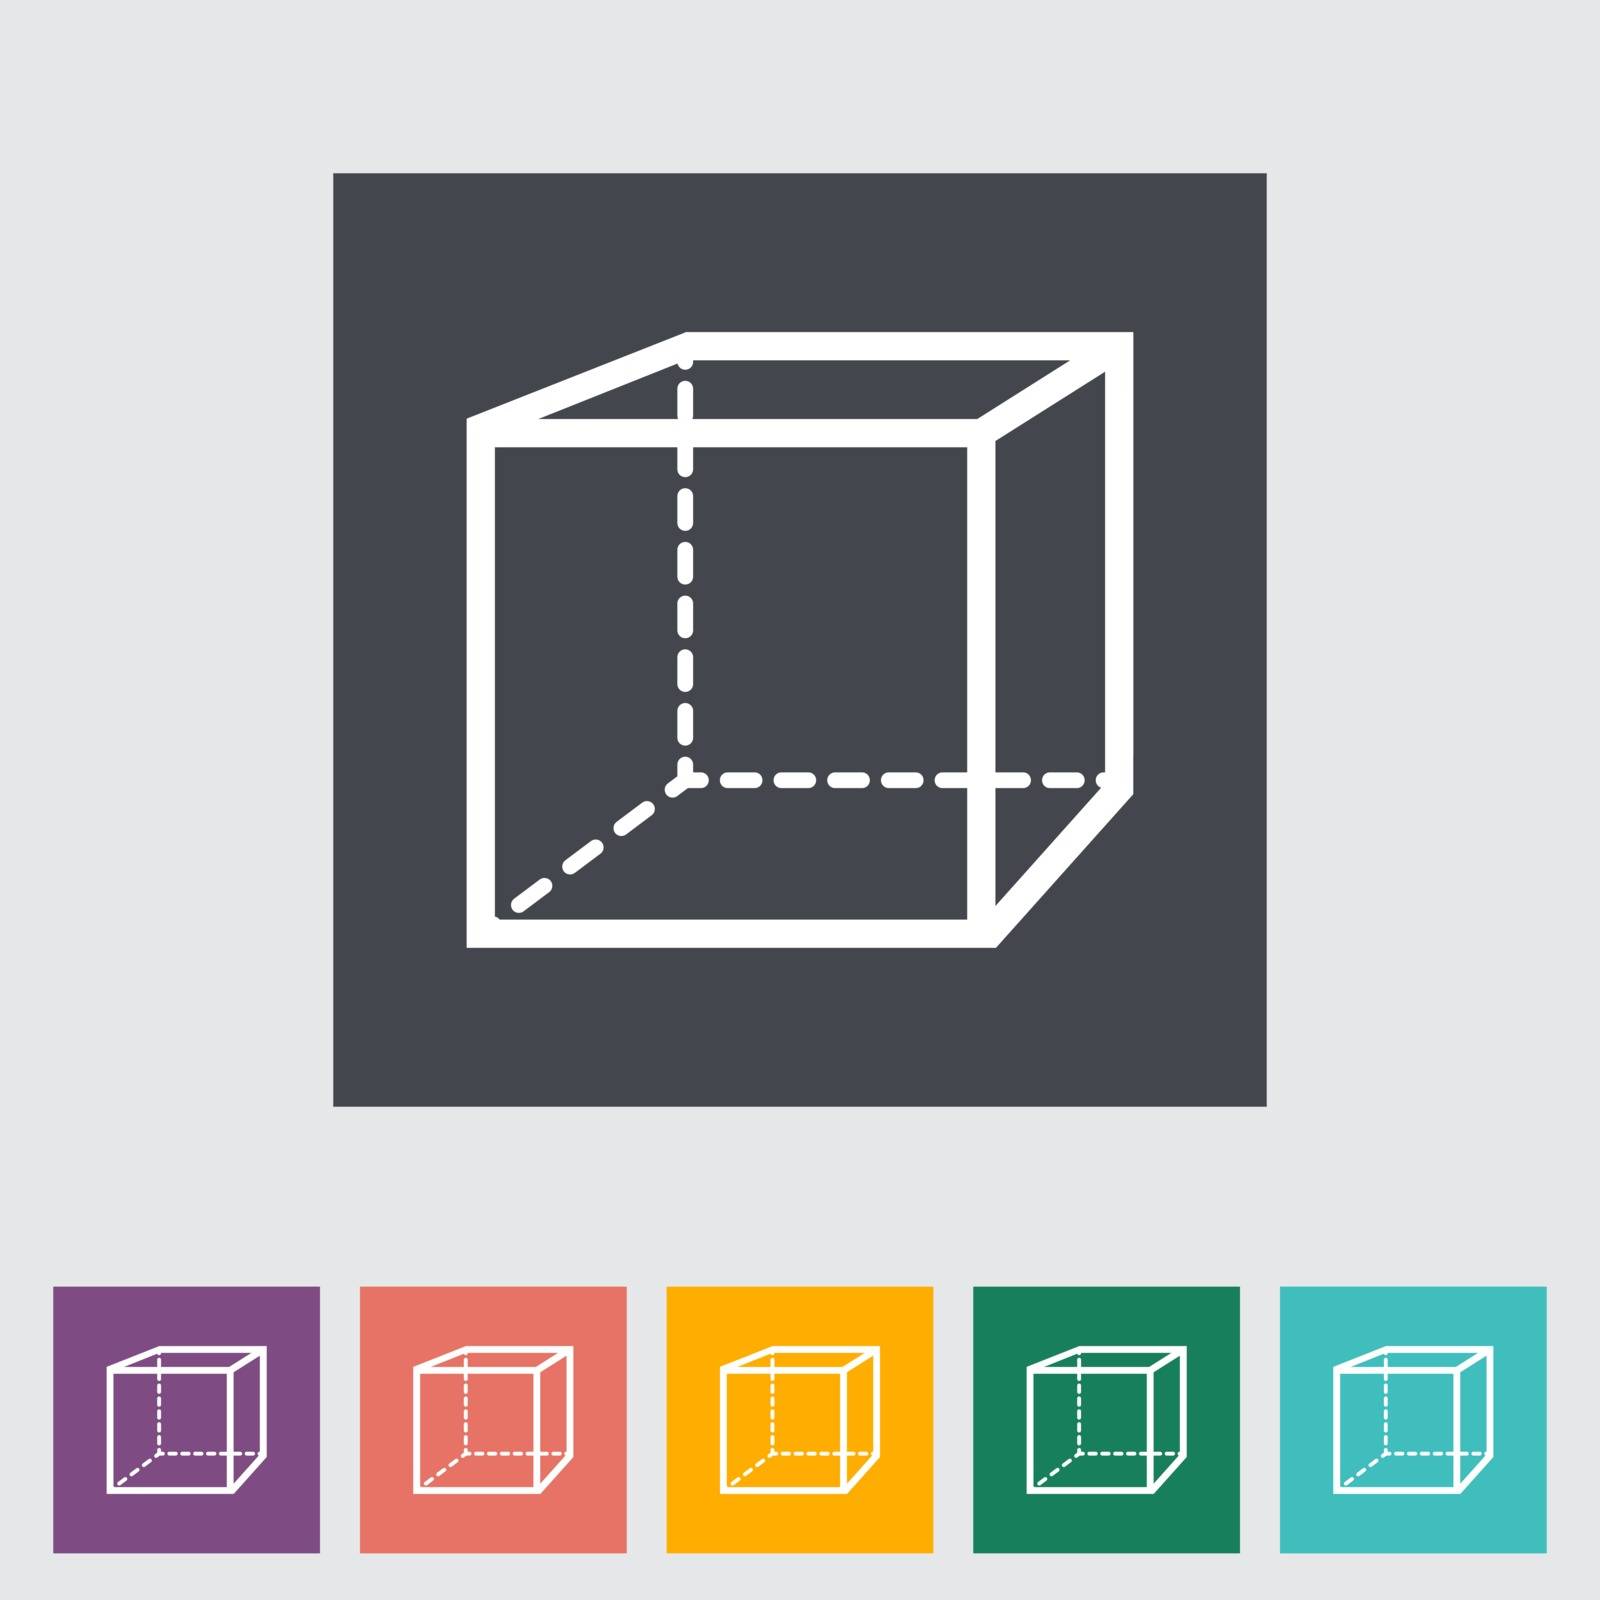 Geometric cube. Single flat icon. Vector illustration.